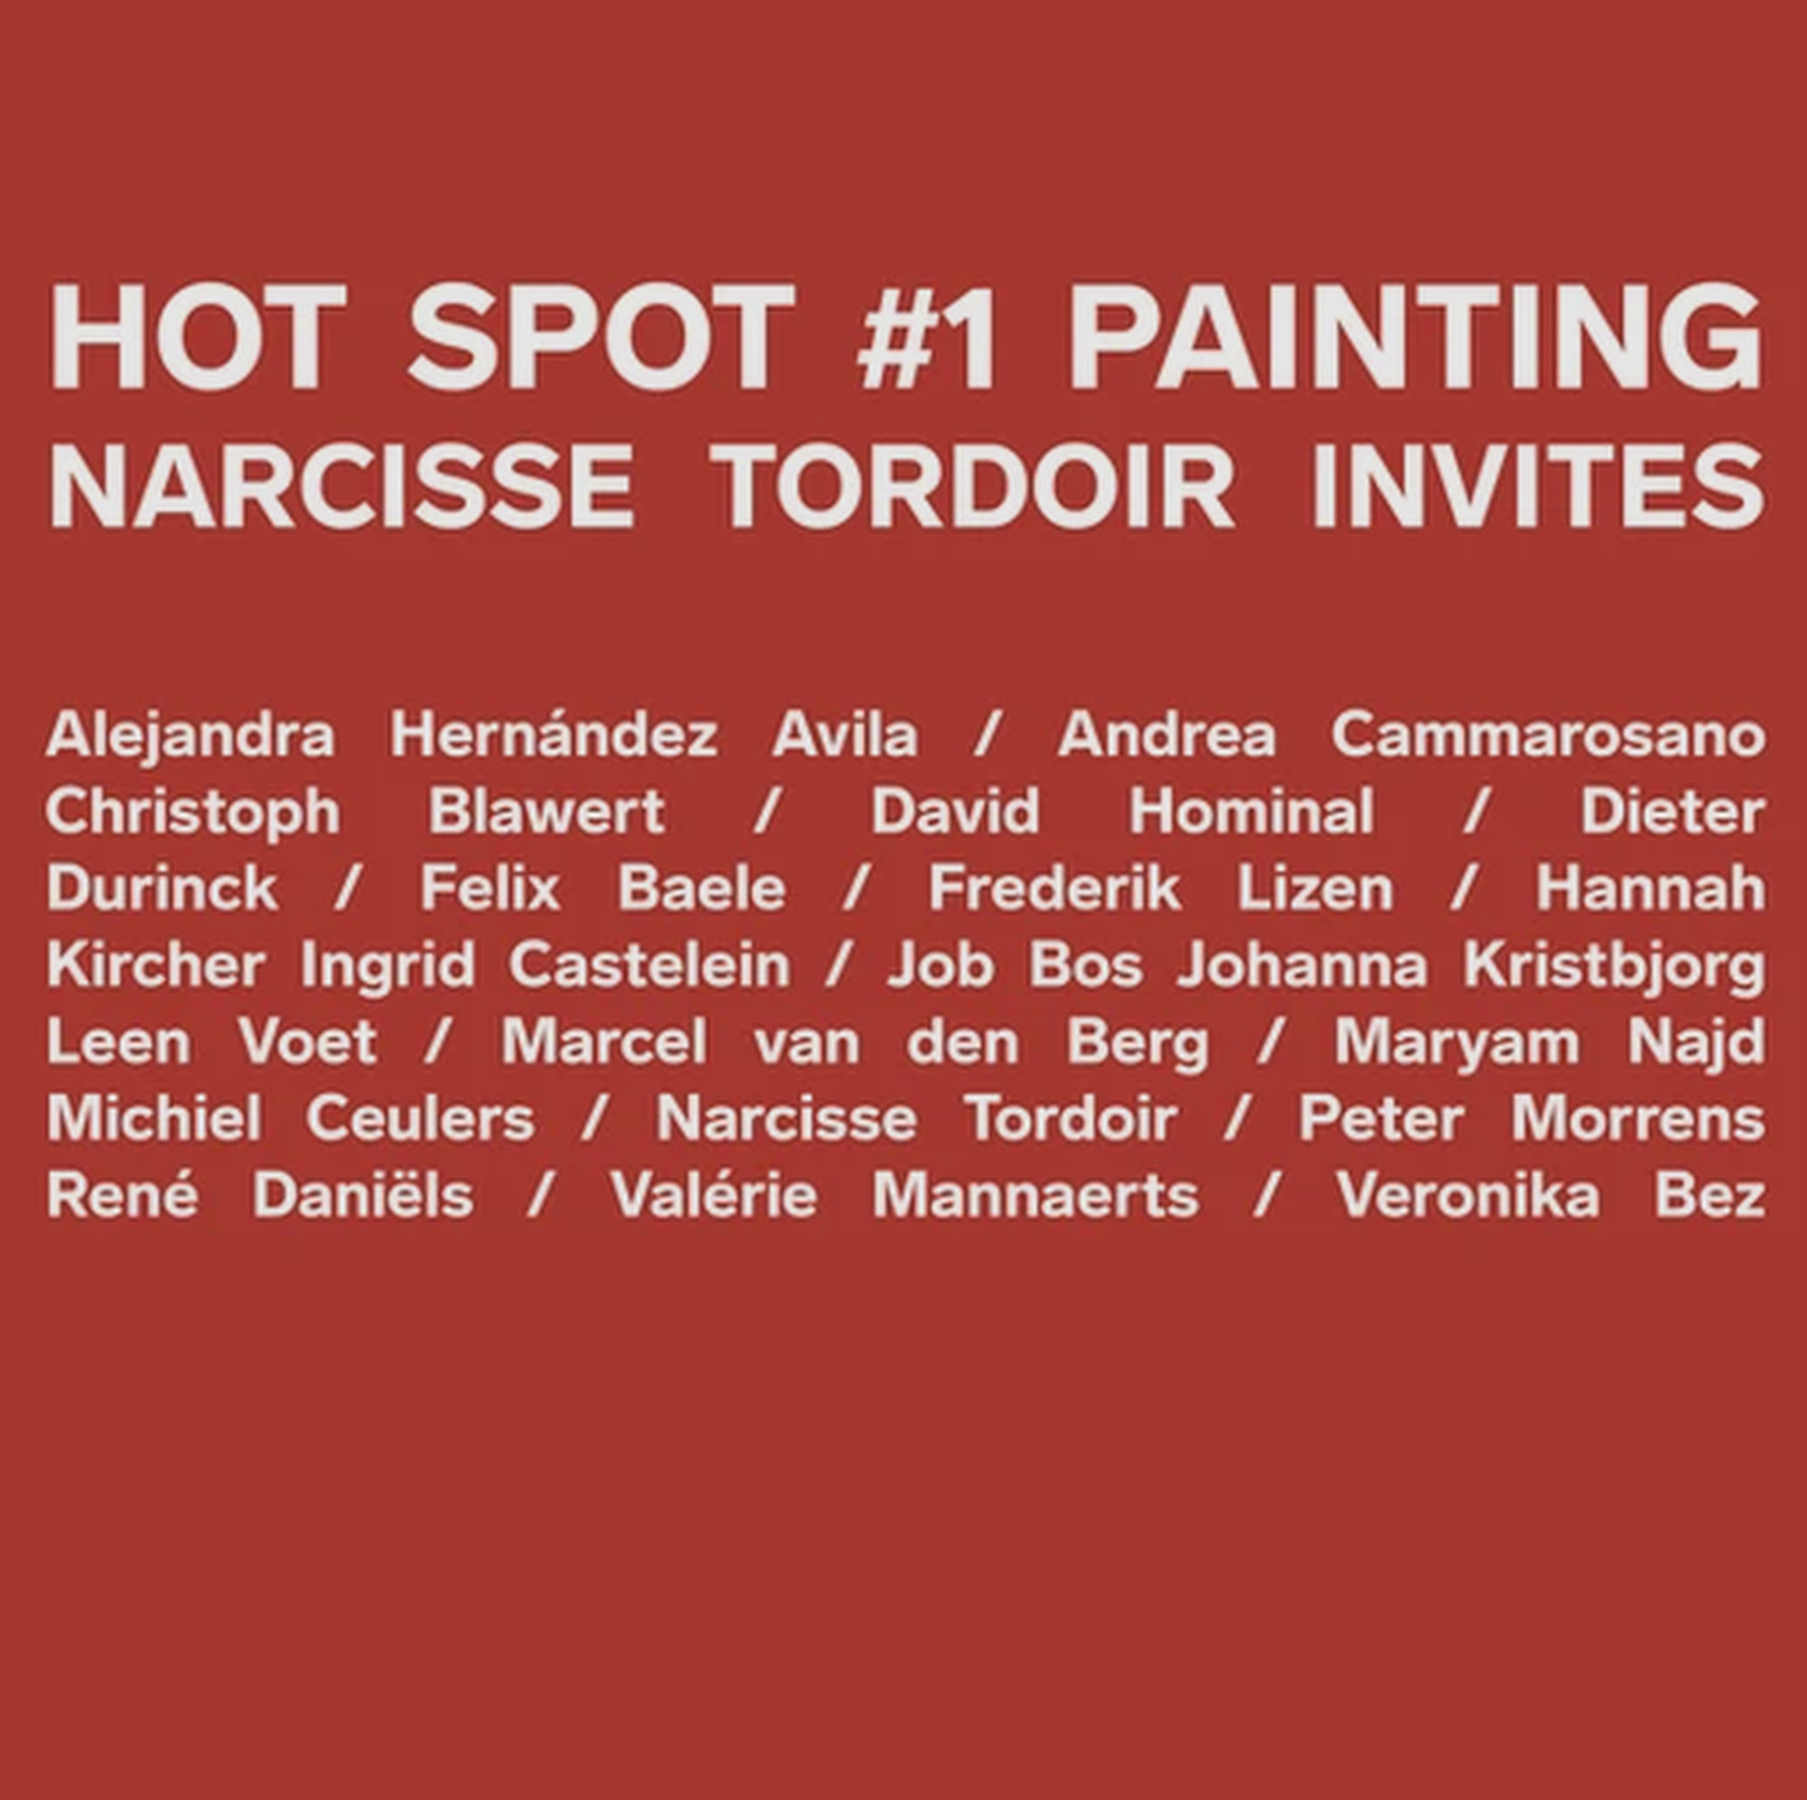 HOT SPOT #1 PAINTING. Narcisse Tordoir invites